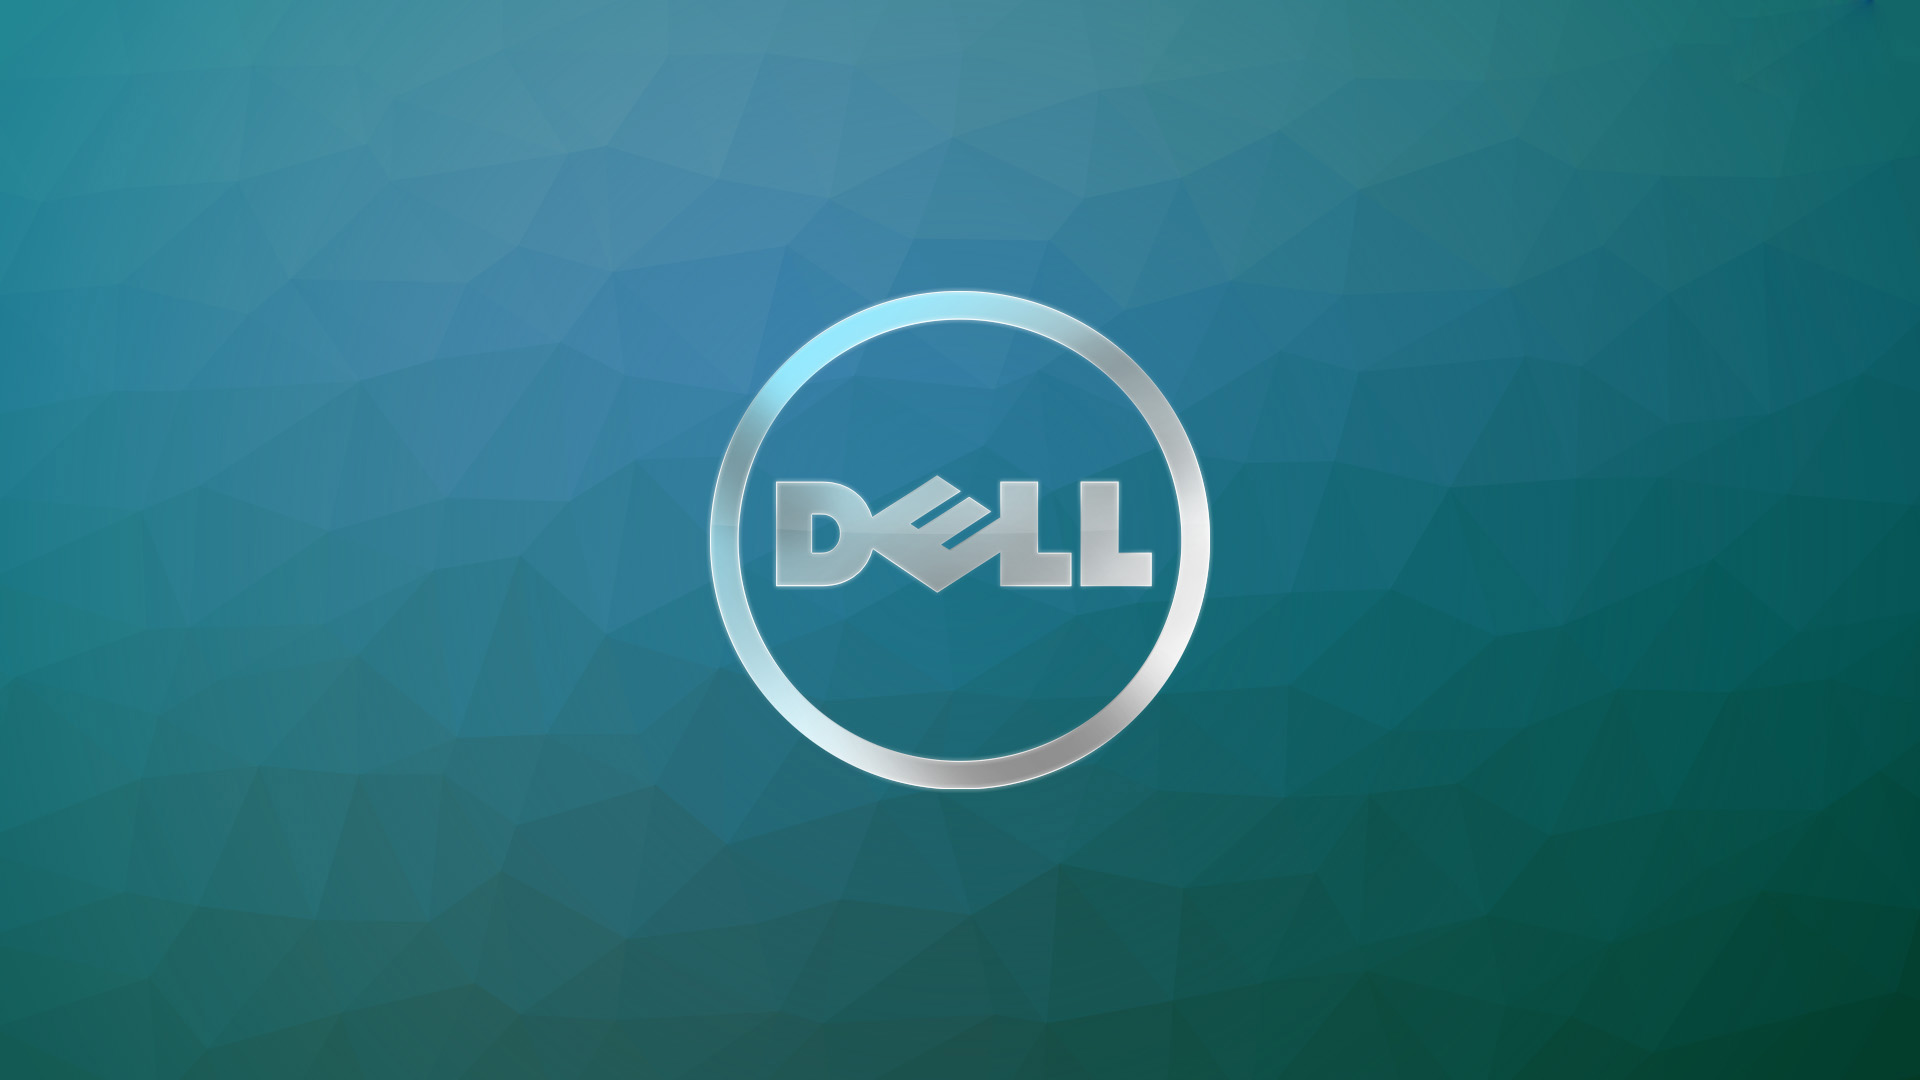 Dell Logo Wallpapers | PixelsTalk.Net